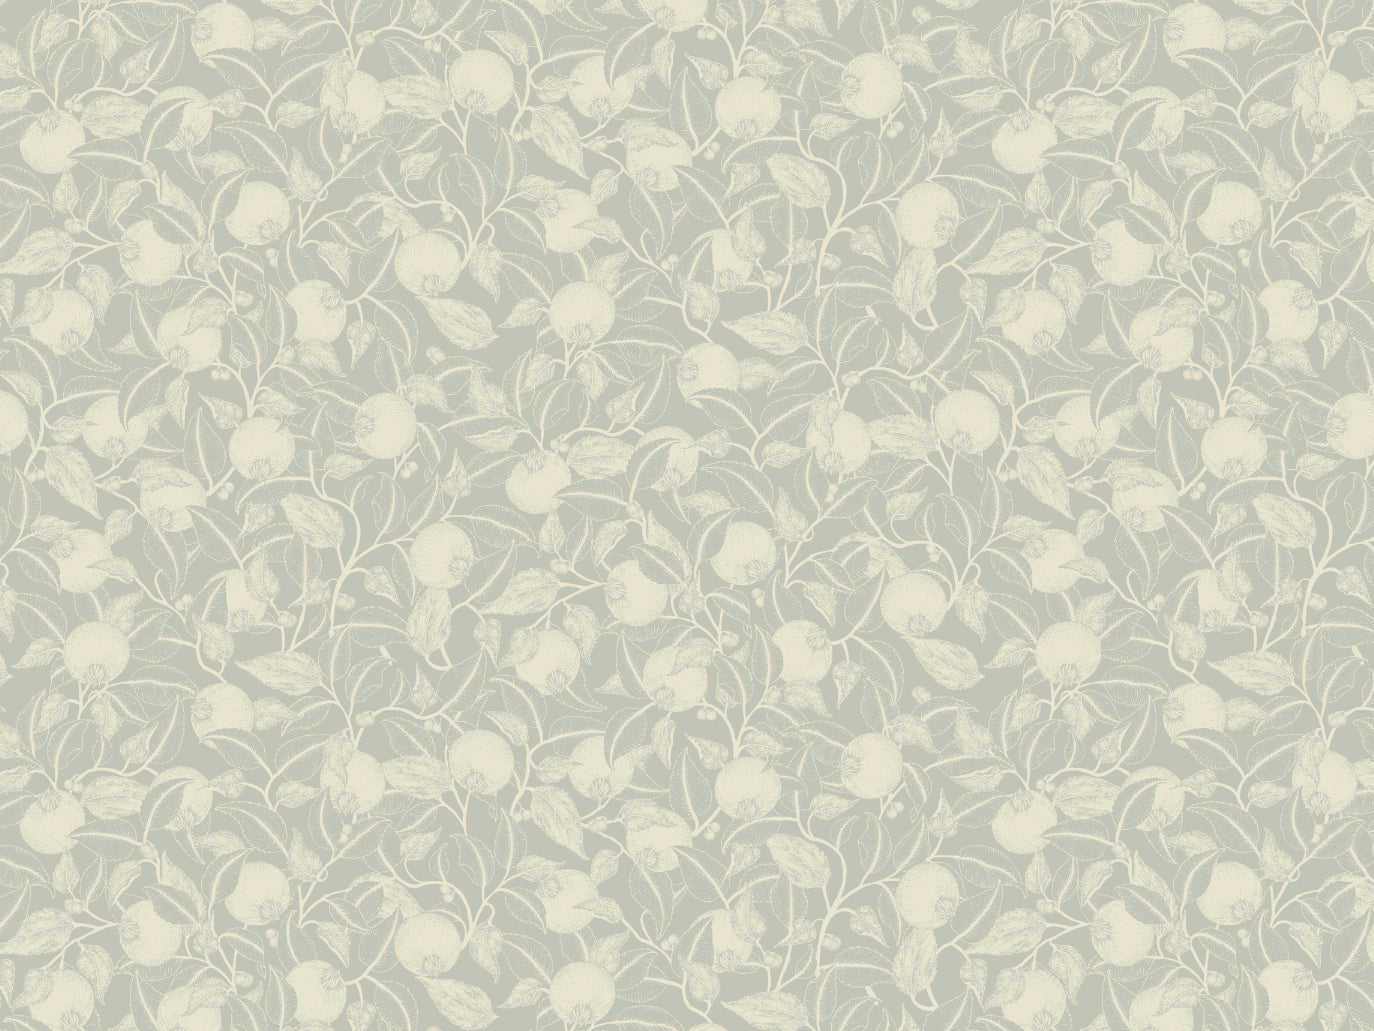 Floral Wallpaper - Pomegranate - Grey